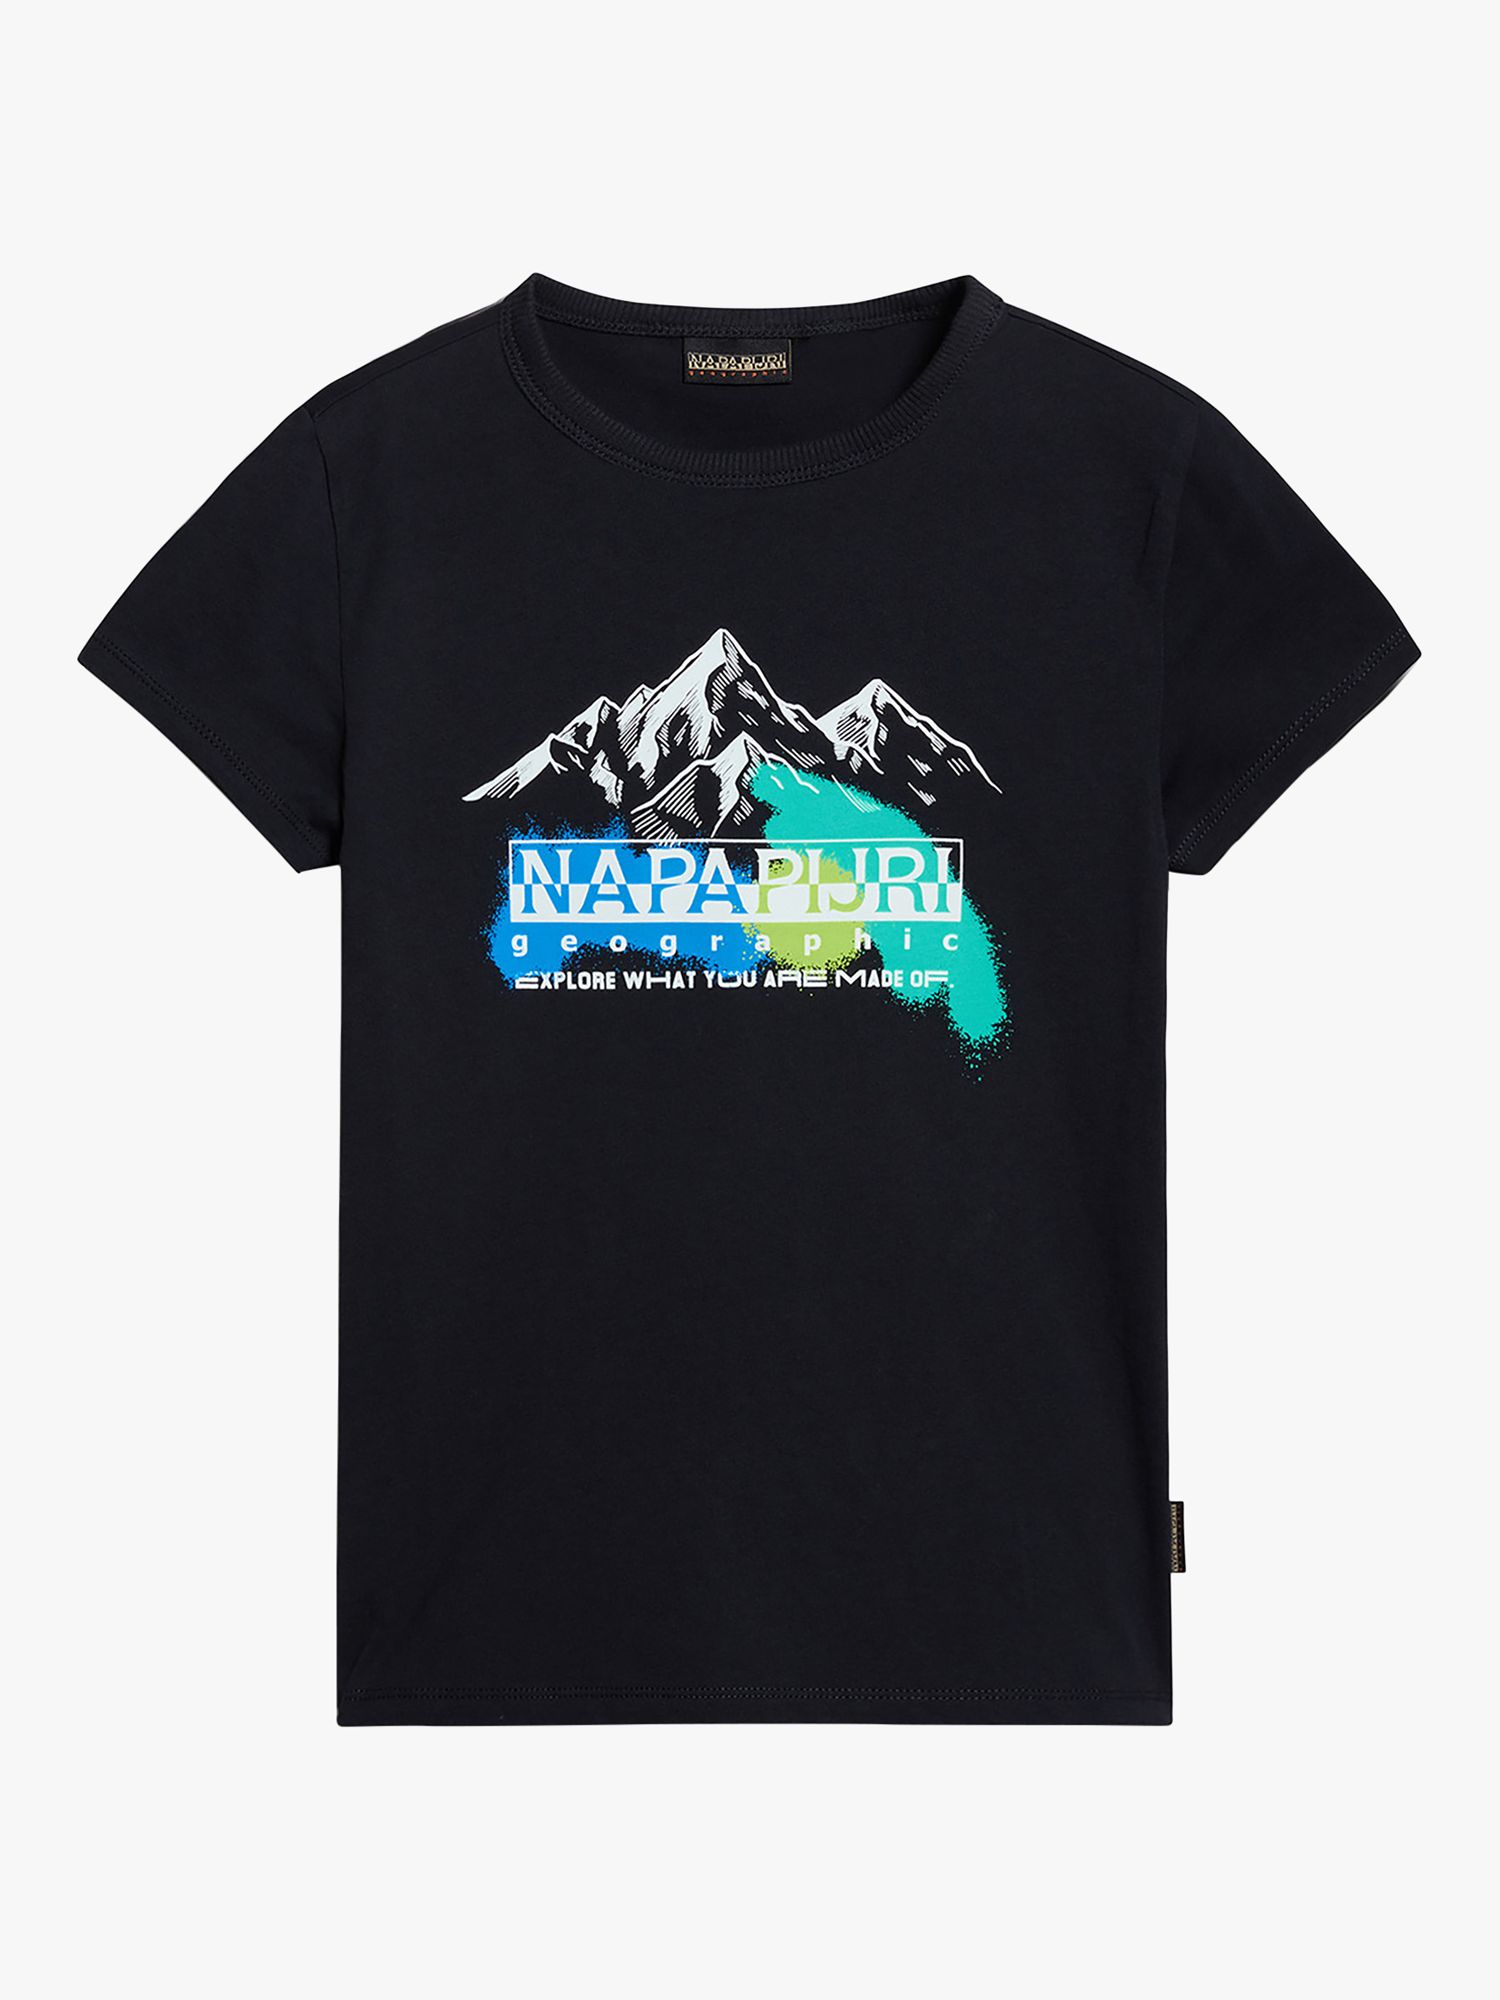 Buy Napapijri Kids' Liard Mountain Graphic T-Shirt, Black Online at johnlewis.com